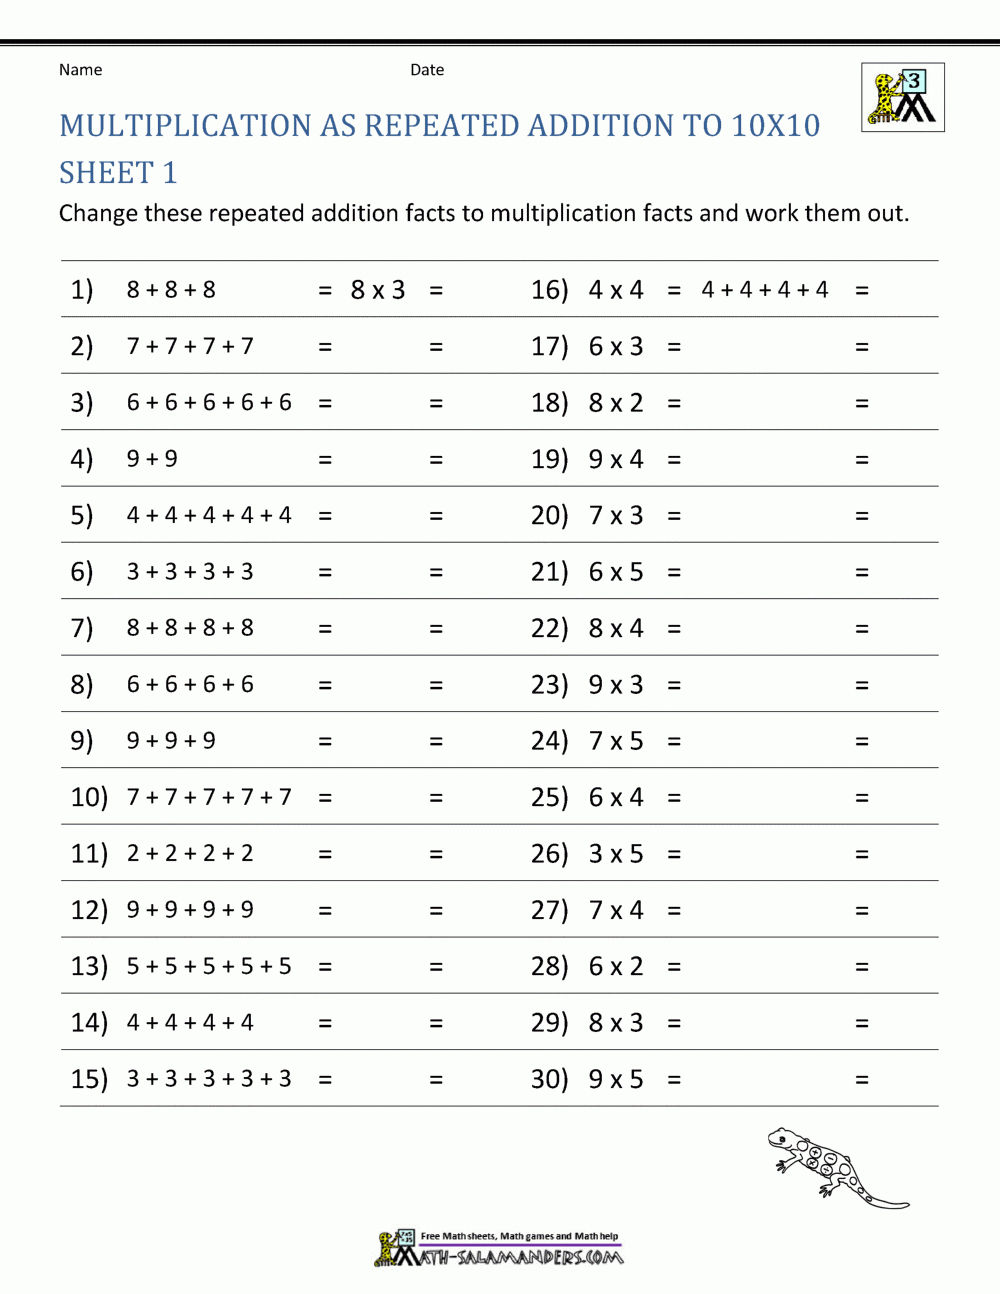 Multiplication Facts Worksheets - Understanding pertaining to Printable Multiplication Facts